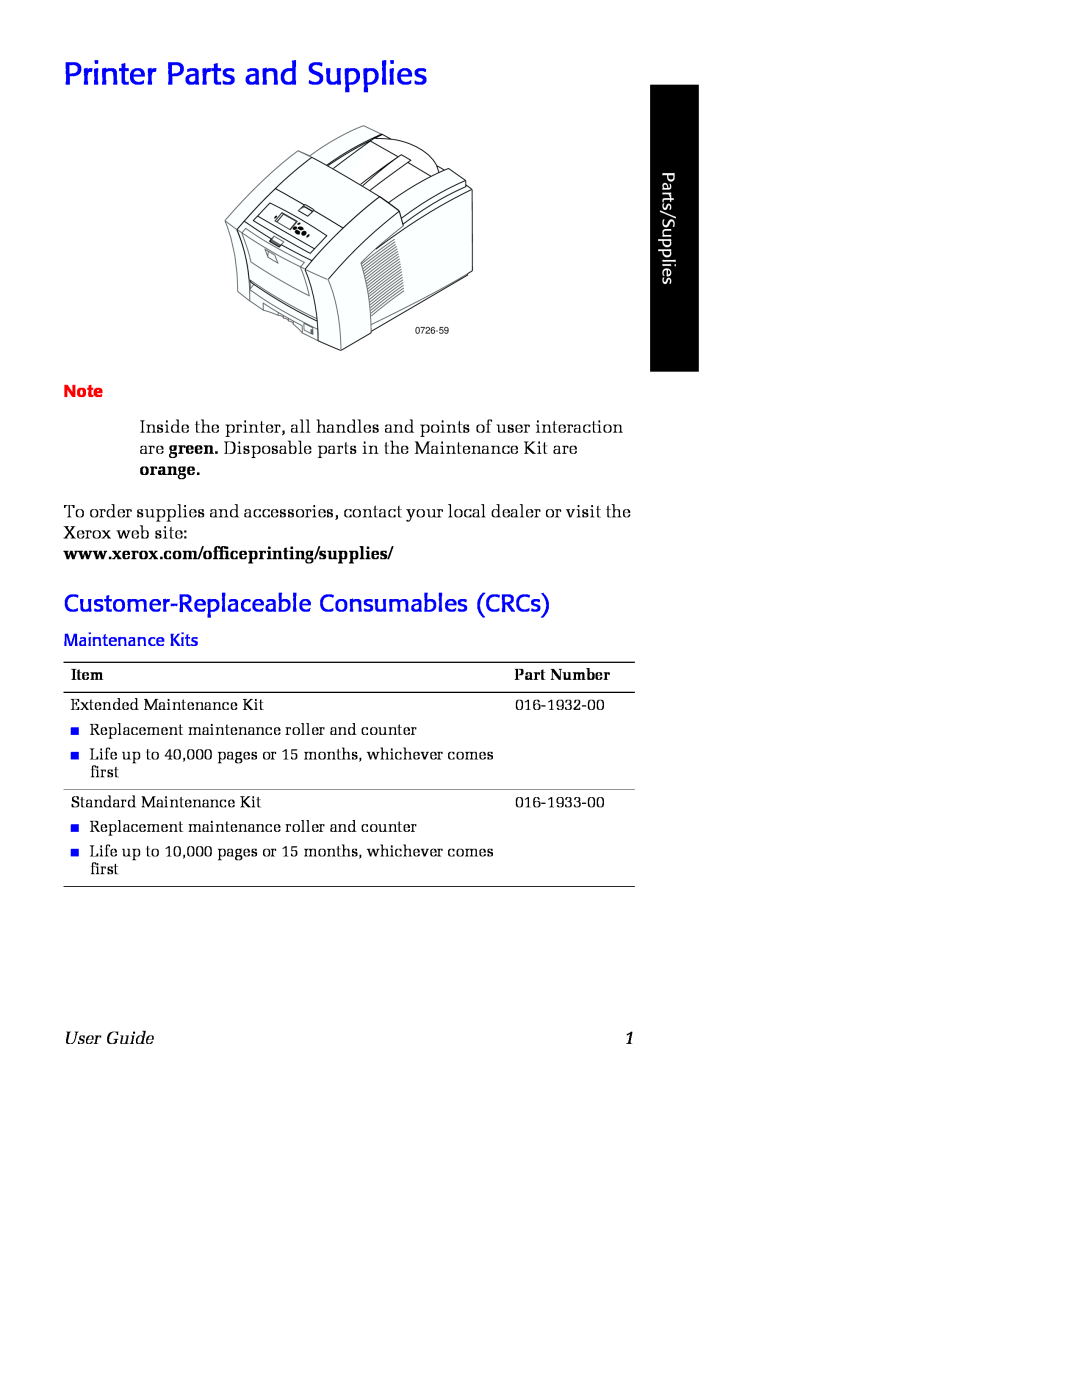 Xerox Phaser 860 manual Printer Parts and Supplies, Customer-Replaceable Consumables CRCs, Parts/Supplies, Maintenance Kits 